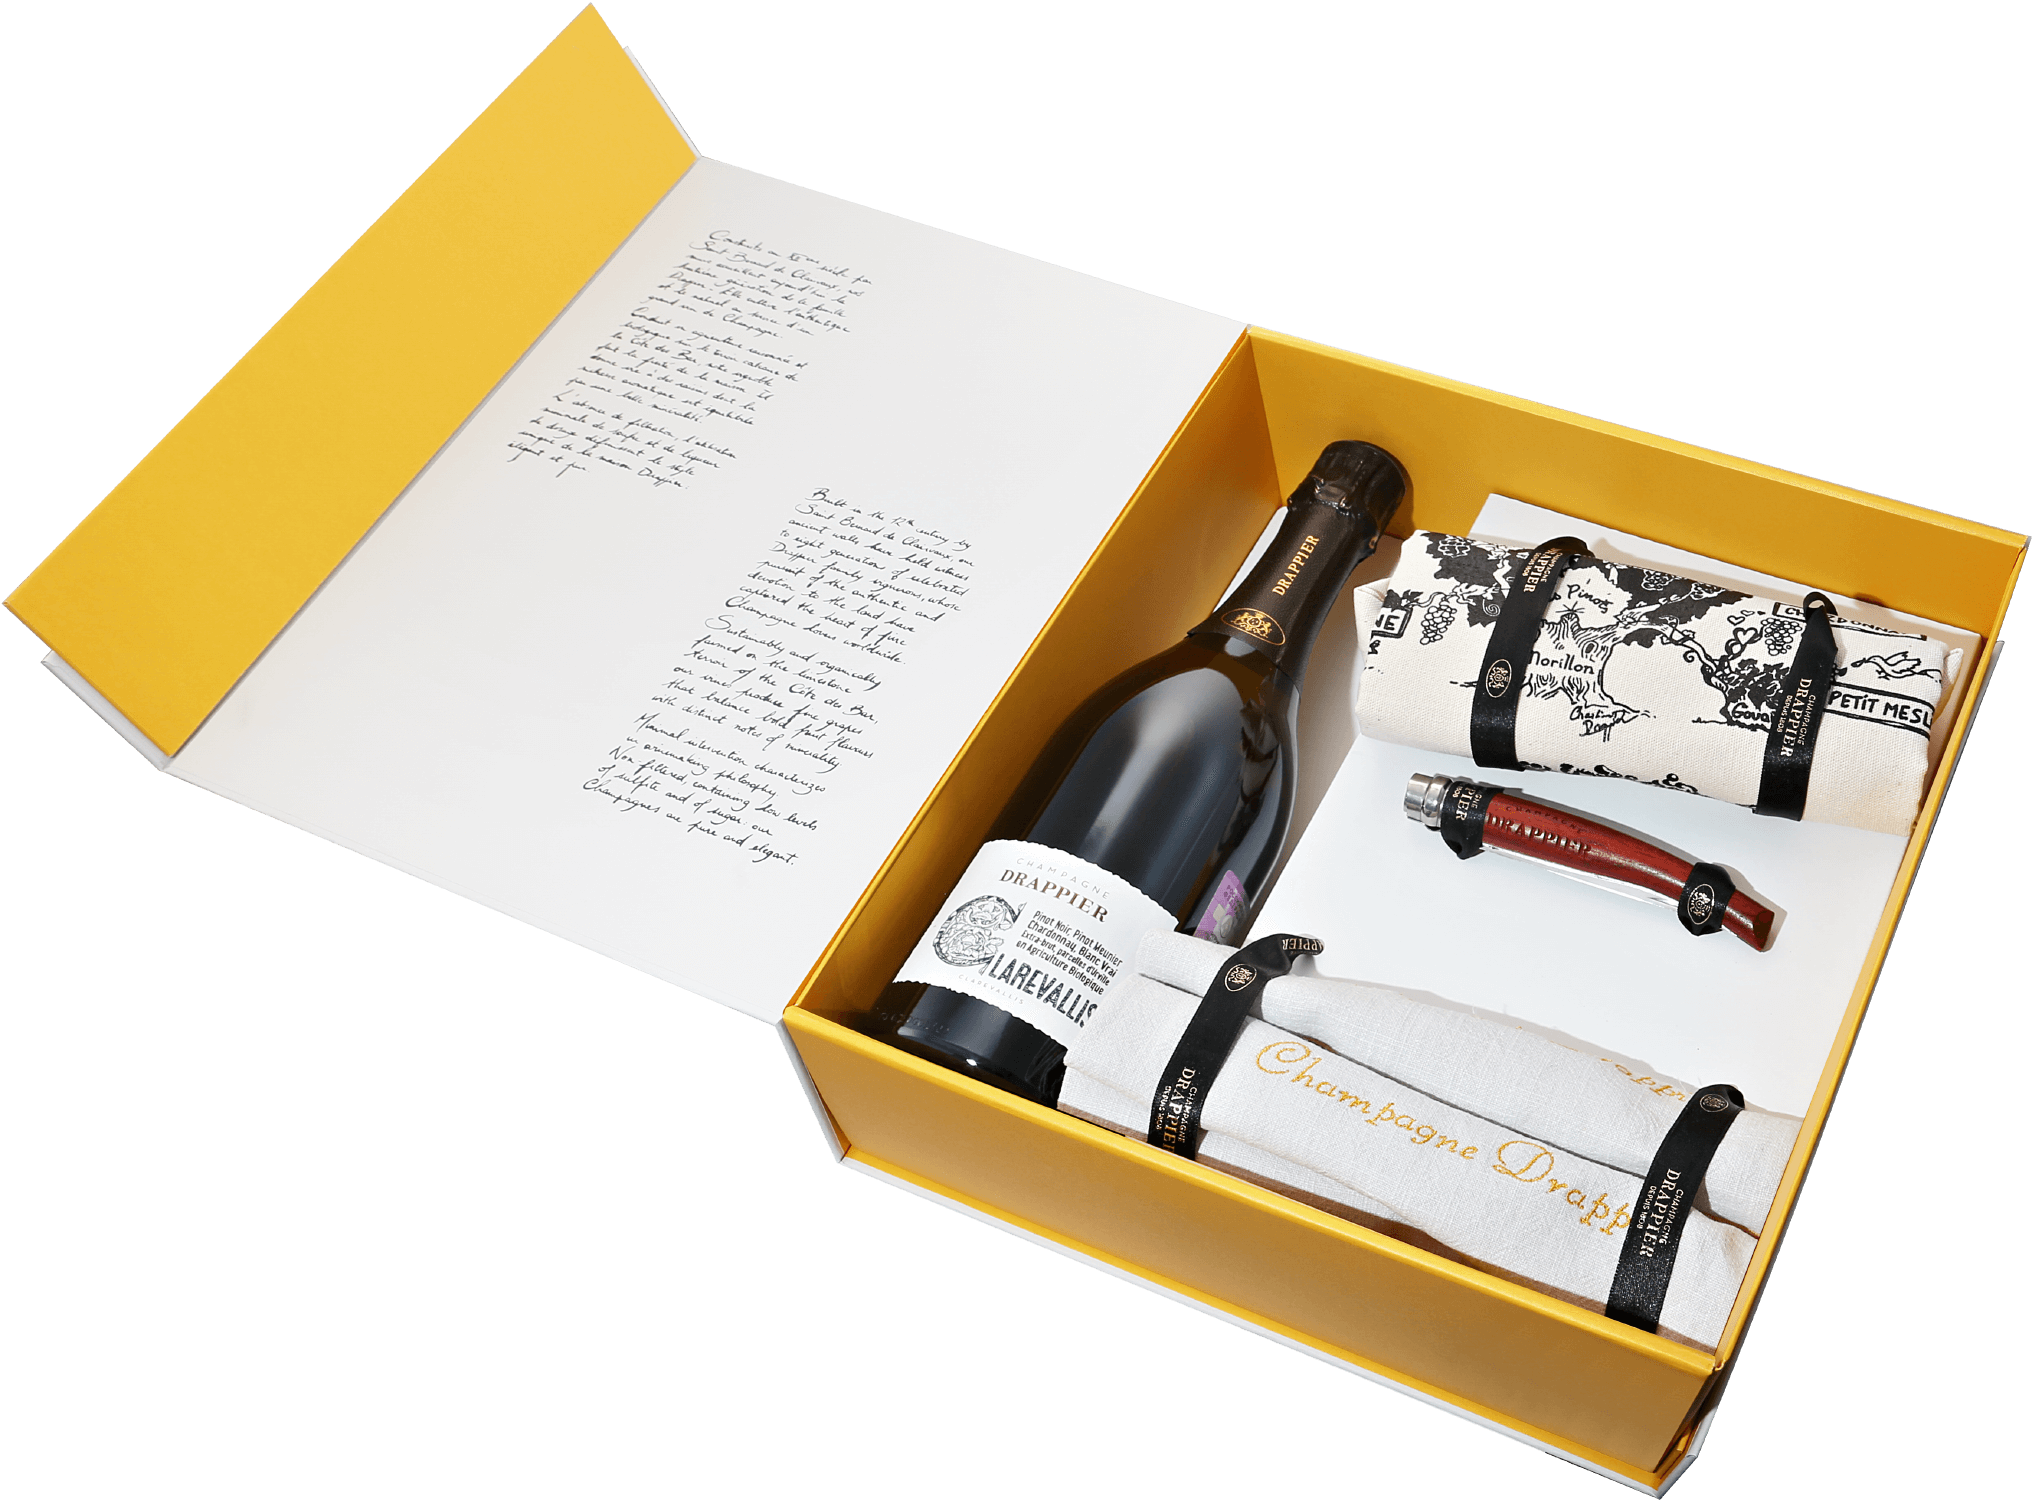 Drappier Clarevallis Champagne AOC (gift box) drappier clarevallis champagne aoc gift box